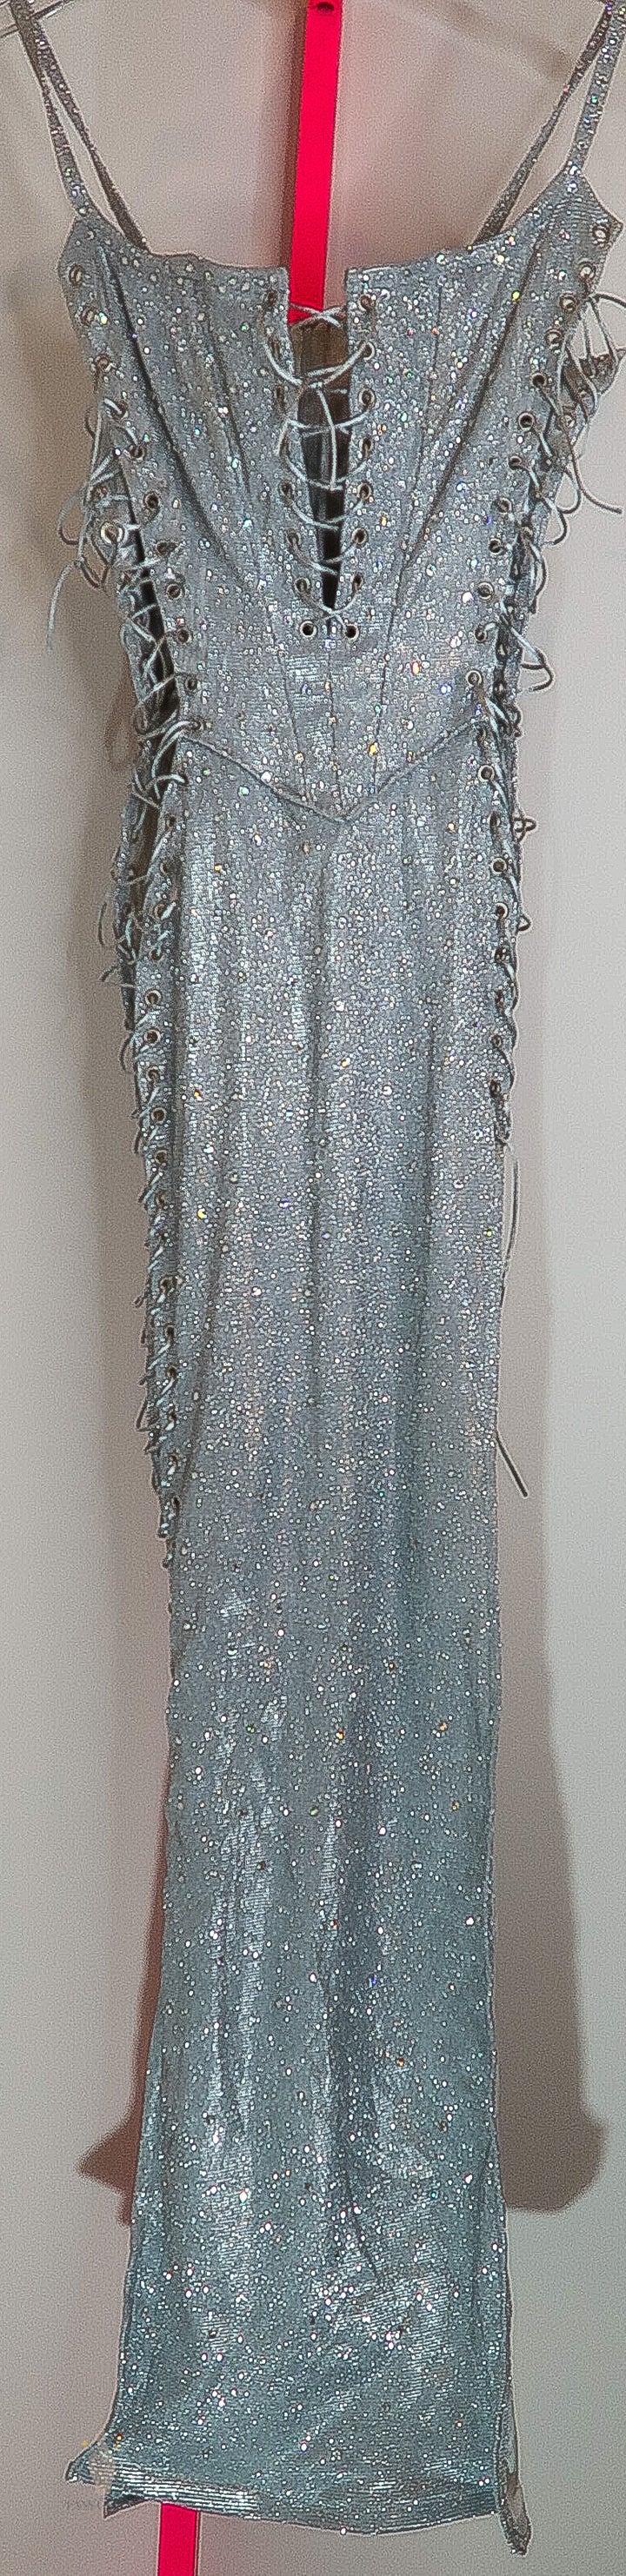 Kayley Gunner AVN Sparkle Silver Evening Gown